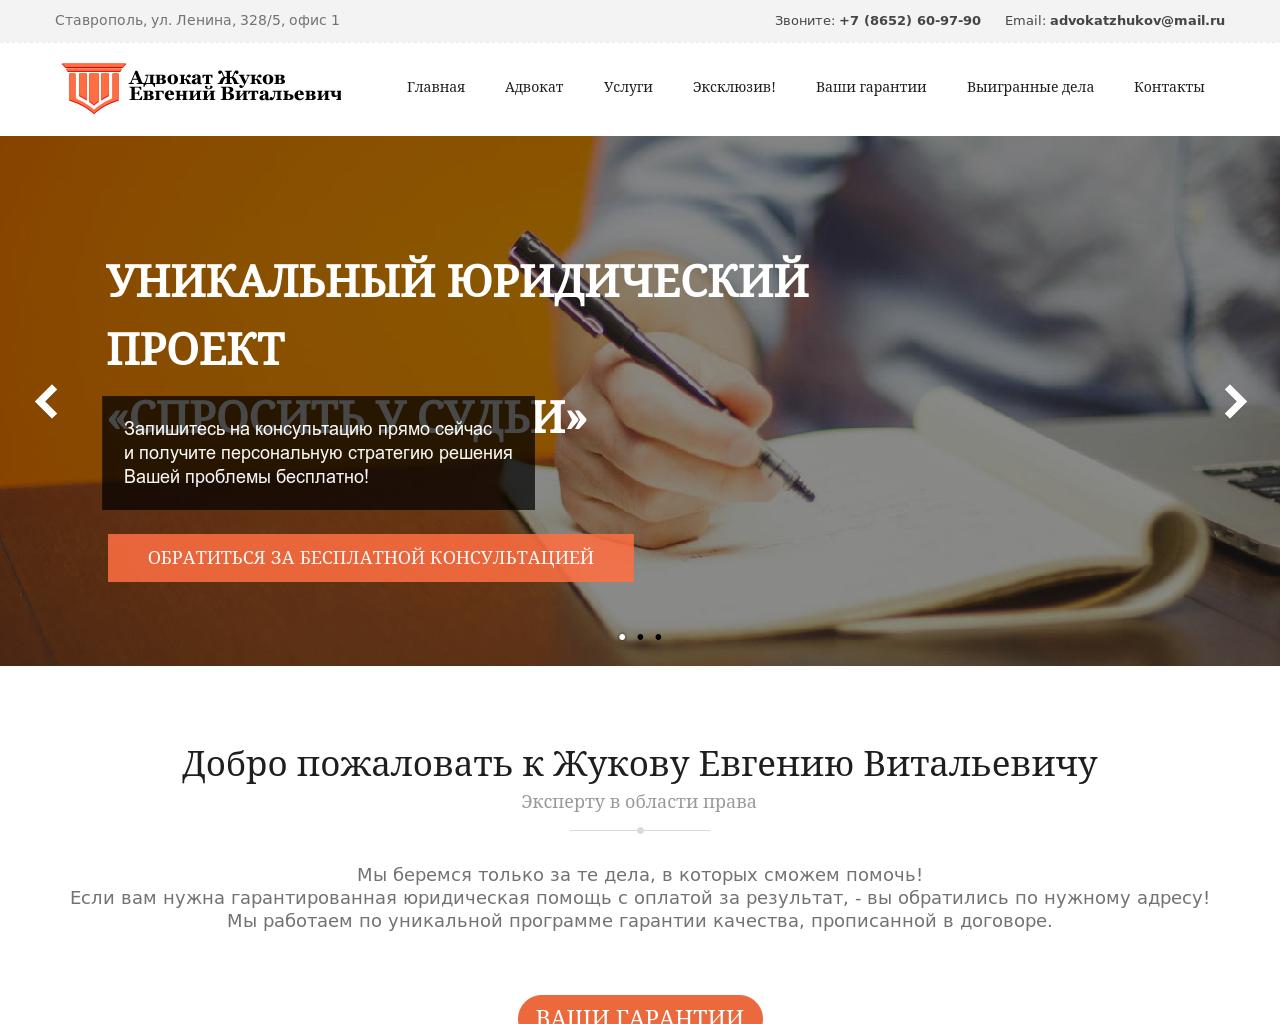 Изображение сайта advokatzhukov.ru в разрешении 1280x1024